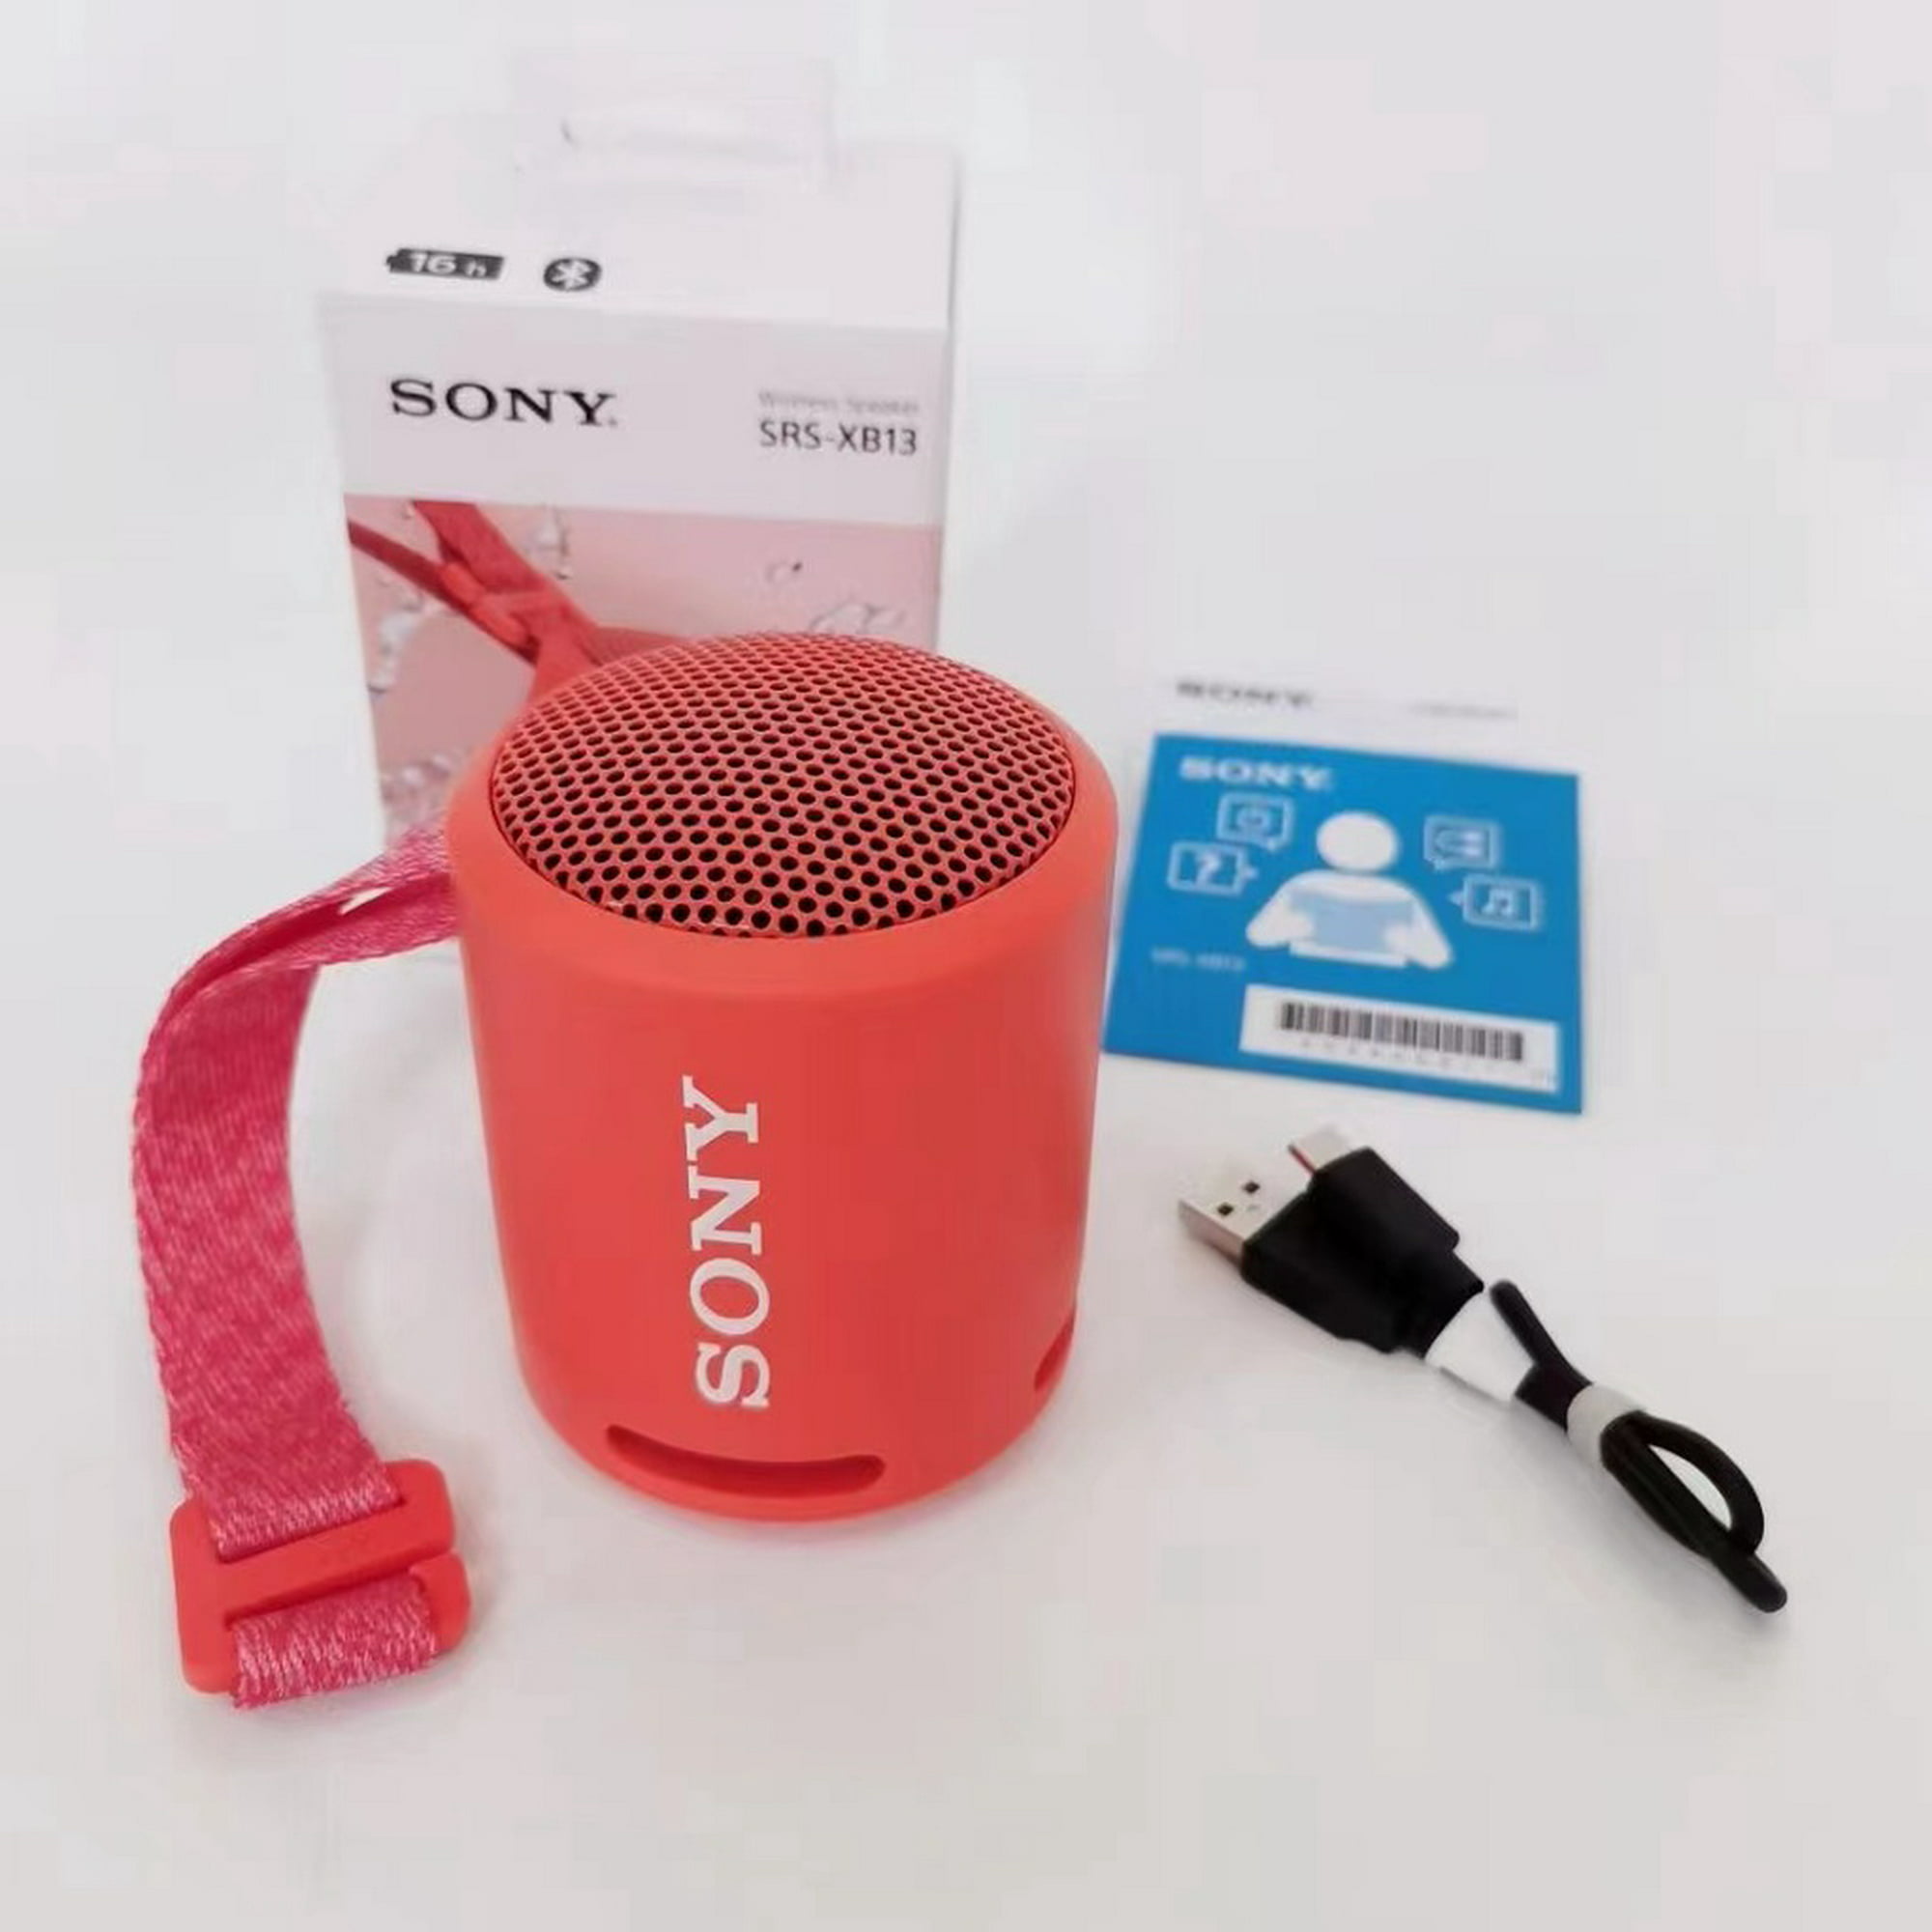 Altavoz portátil Sony SRS-XB13 - Nueva versión 2021 - TV HiFi Pro